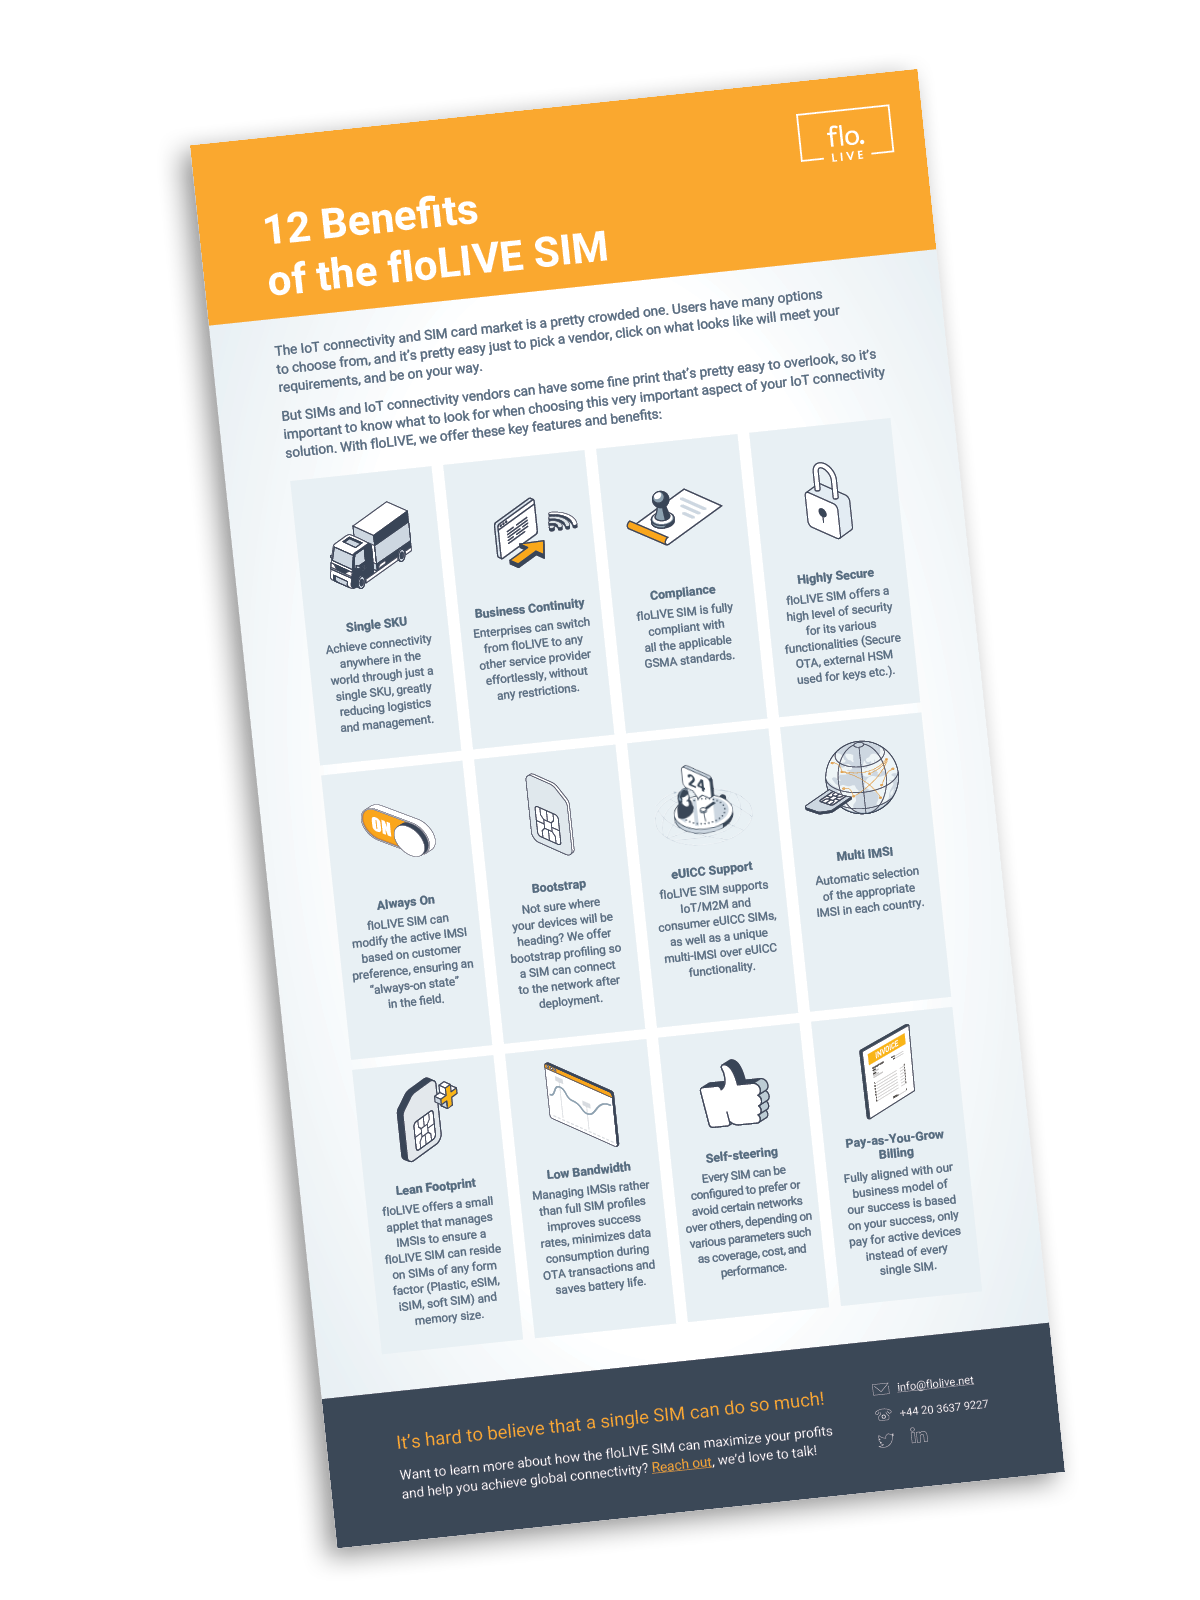 12 Benefits of the floLIVE SIM image